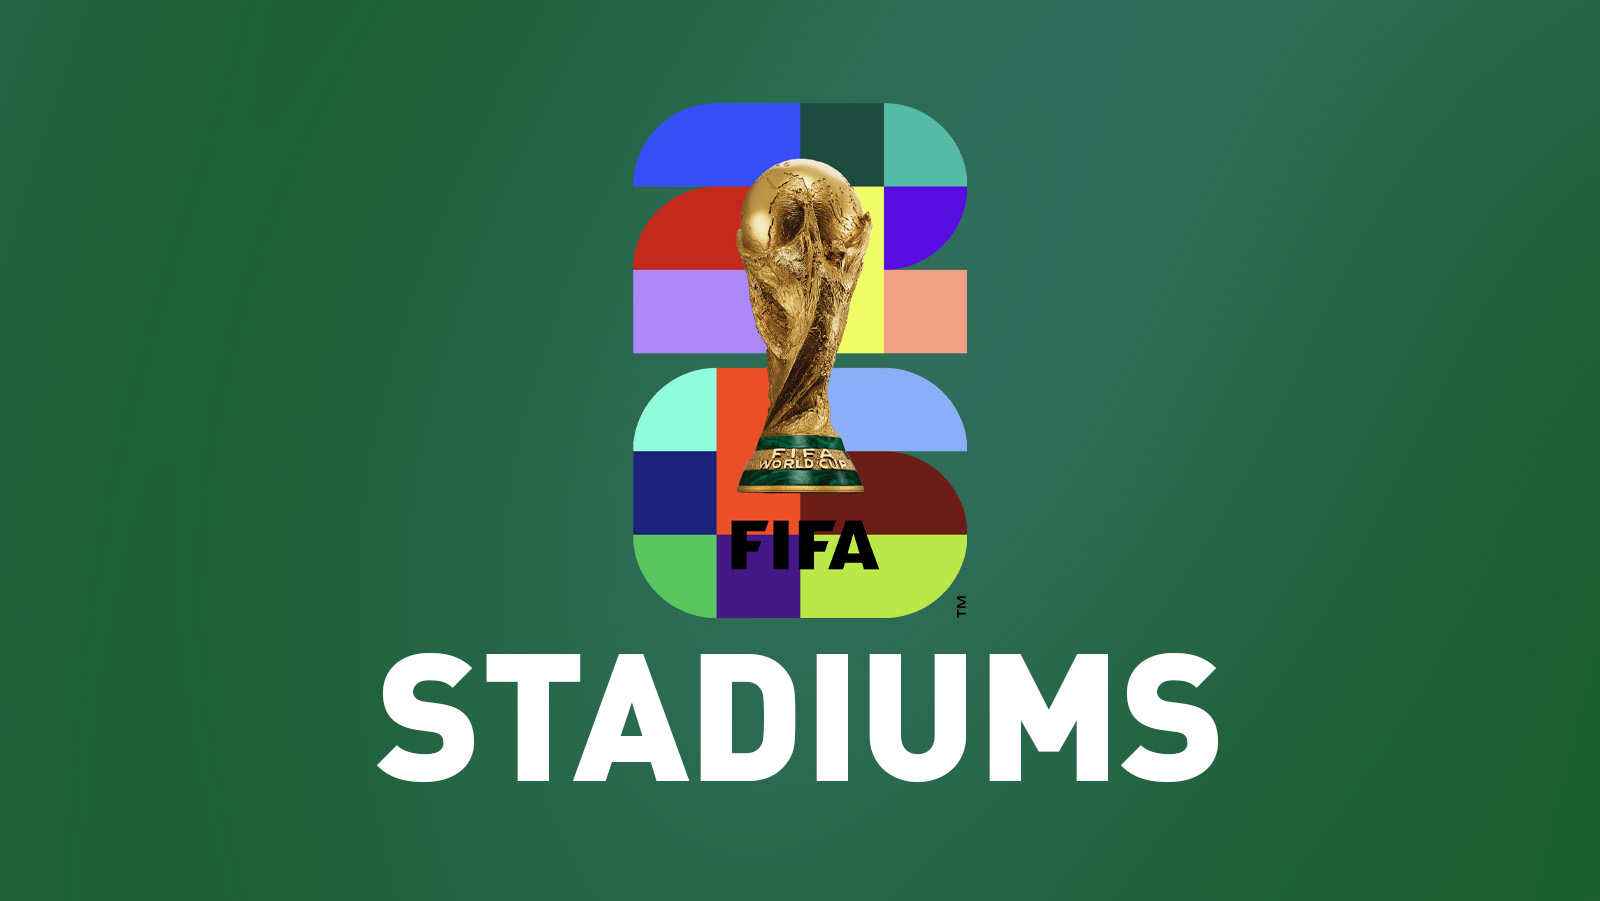 World Cup 2026 – Stadiums